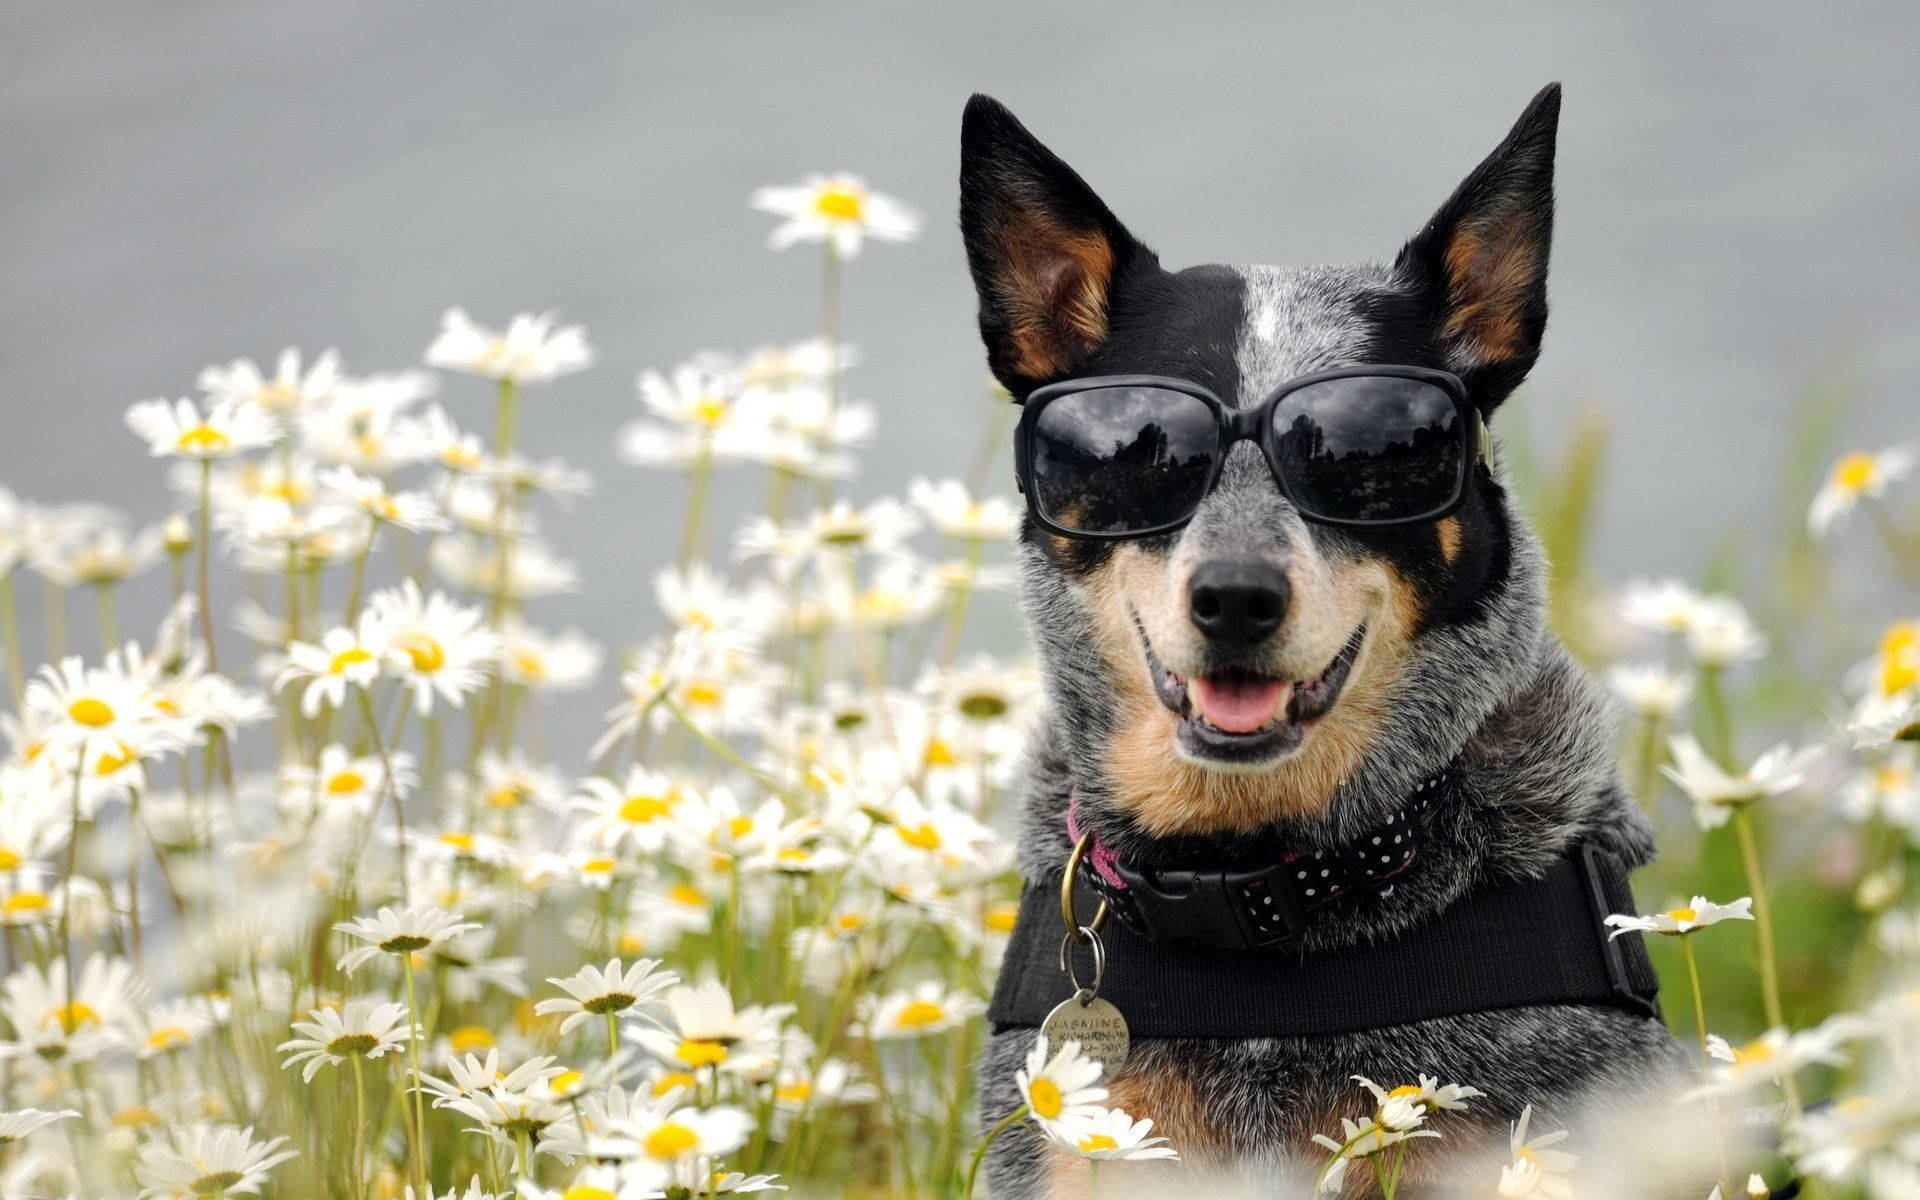 Australian Cattle dog wearing sunglasses in a field of daisies wallpaper